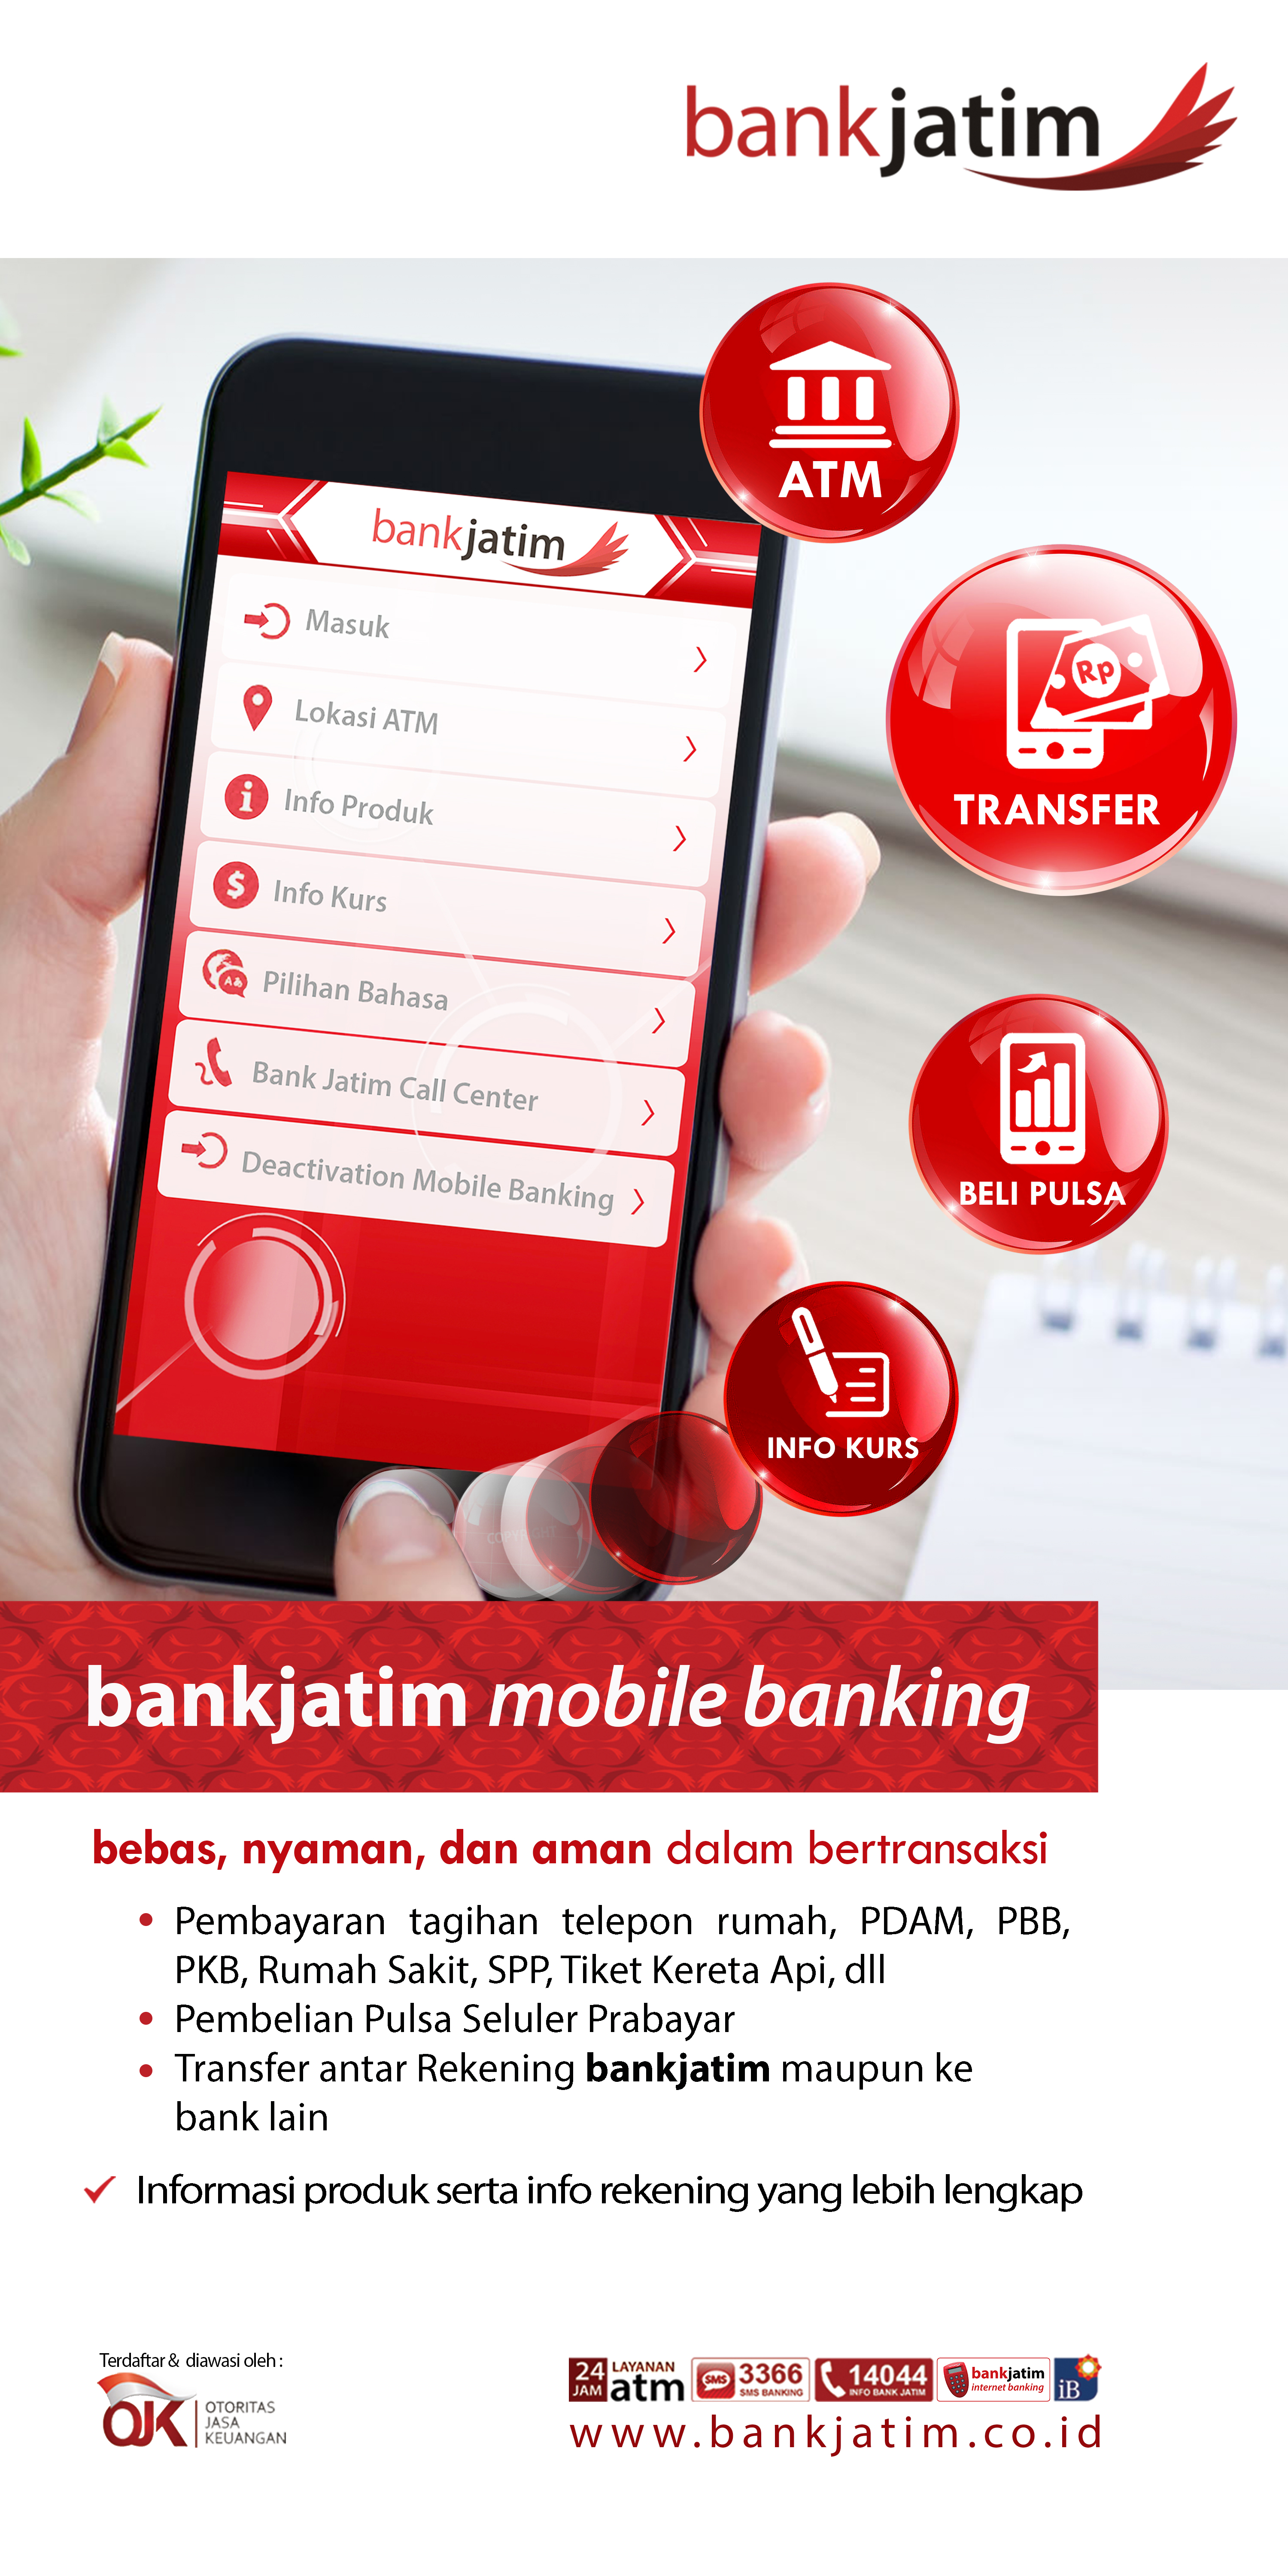 http://www.bankjatim.co.id/id/konvensional/produk-layanan/layanan/mobile-banking